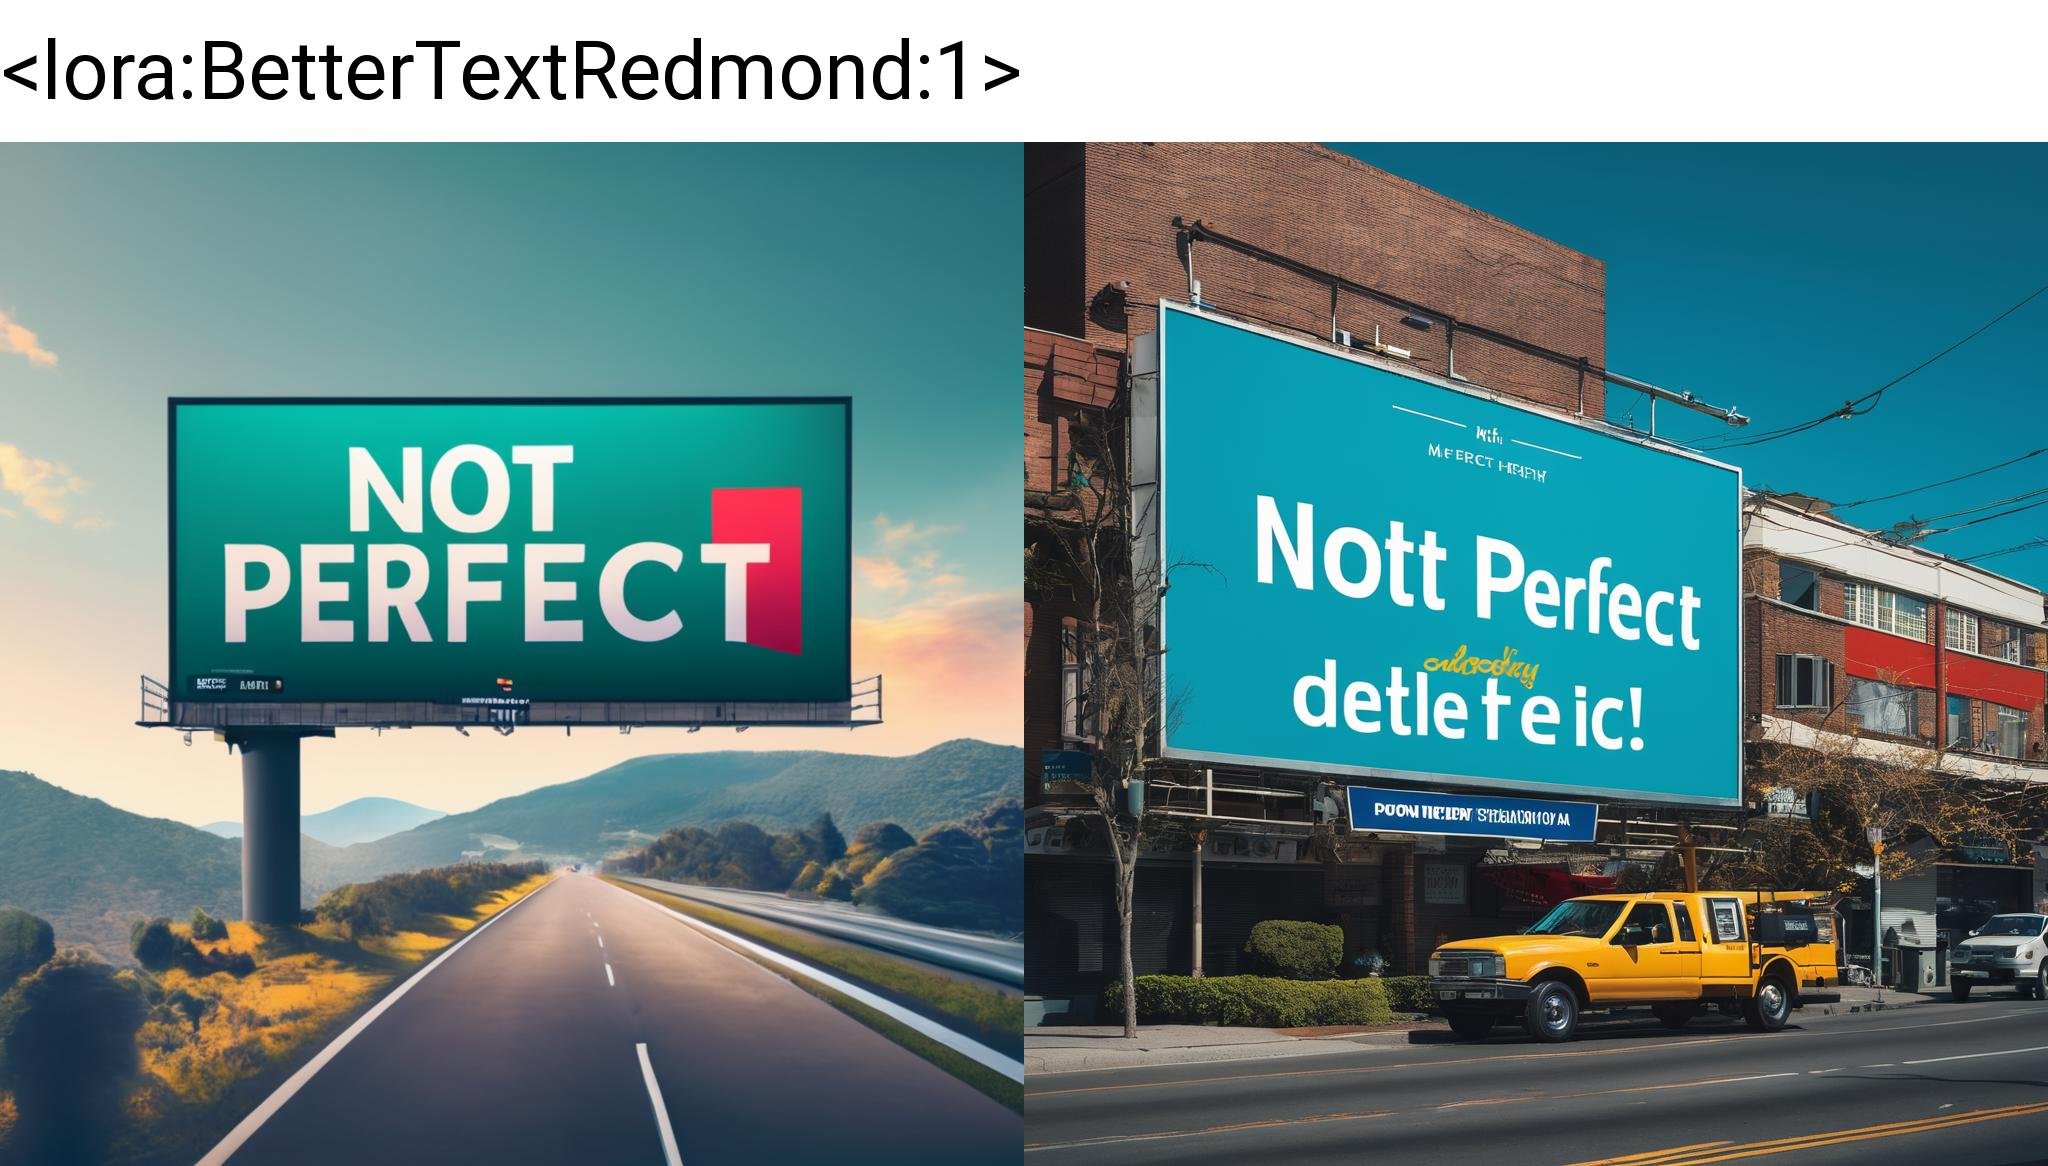 A BILLBOARD WITH "NOT PERFECT" on it, <lora:BetterTextRedmond:1>